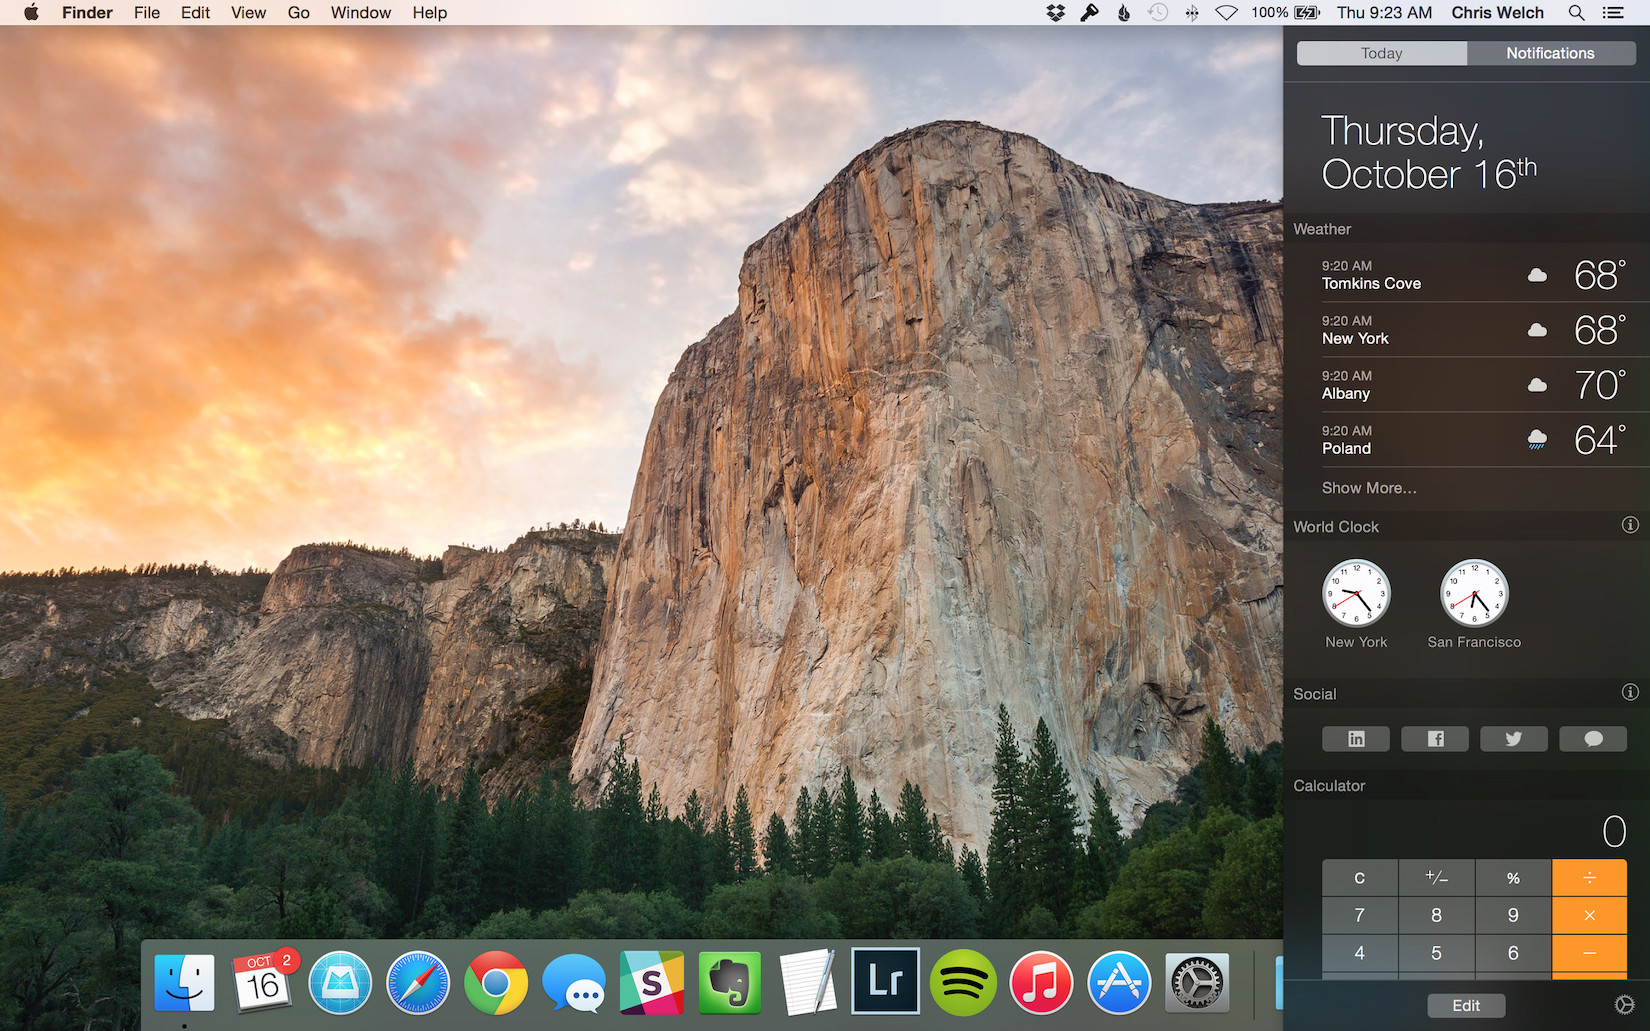 Mac OS X 10.10 Yosemite Today Desktop Feature (2014)